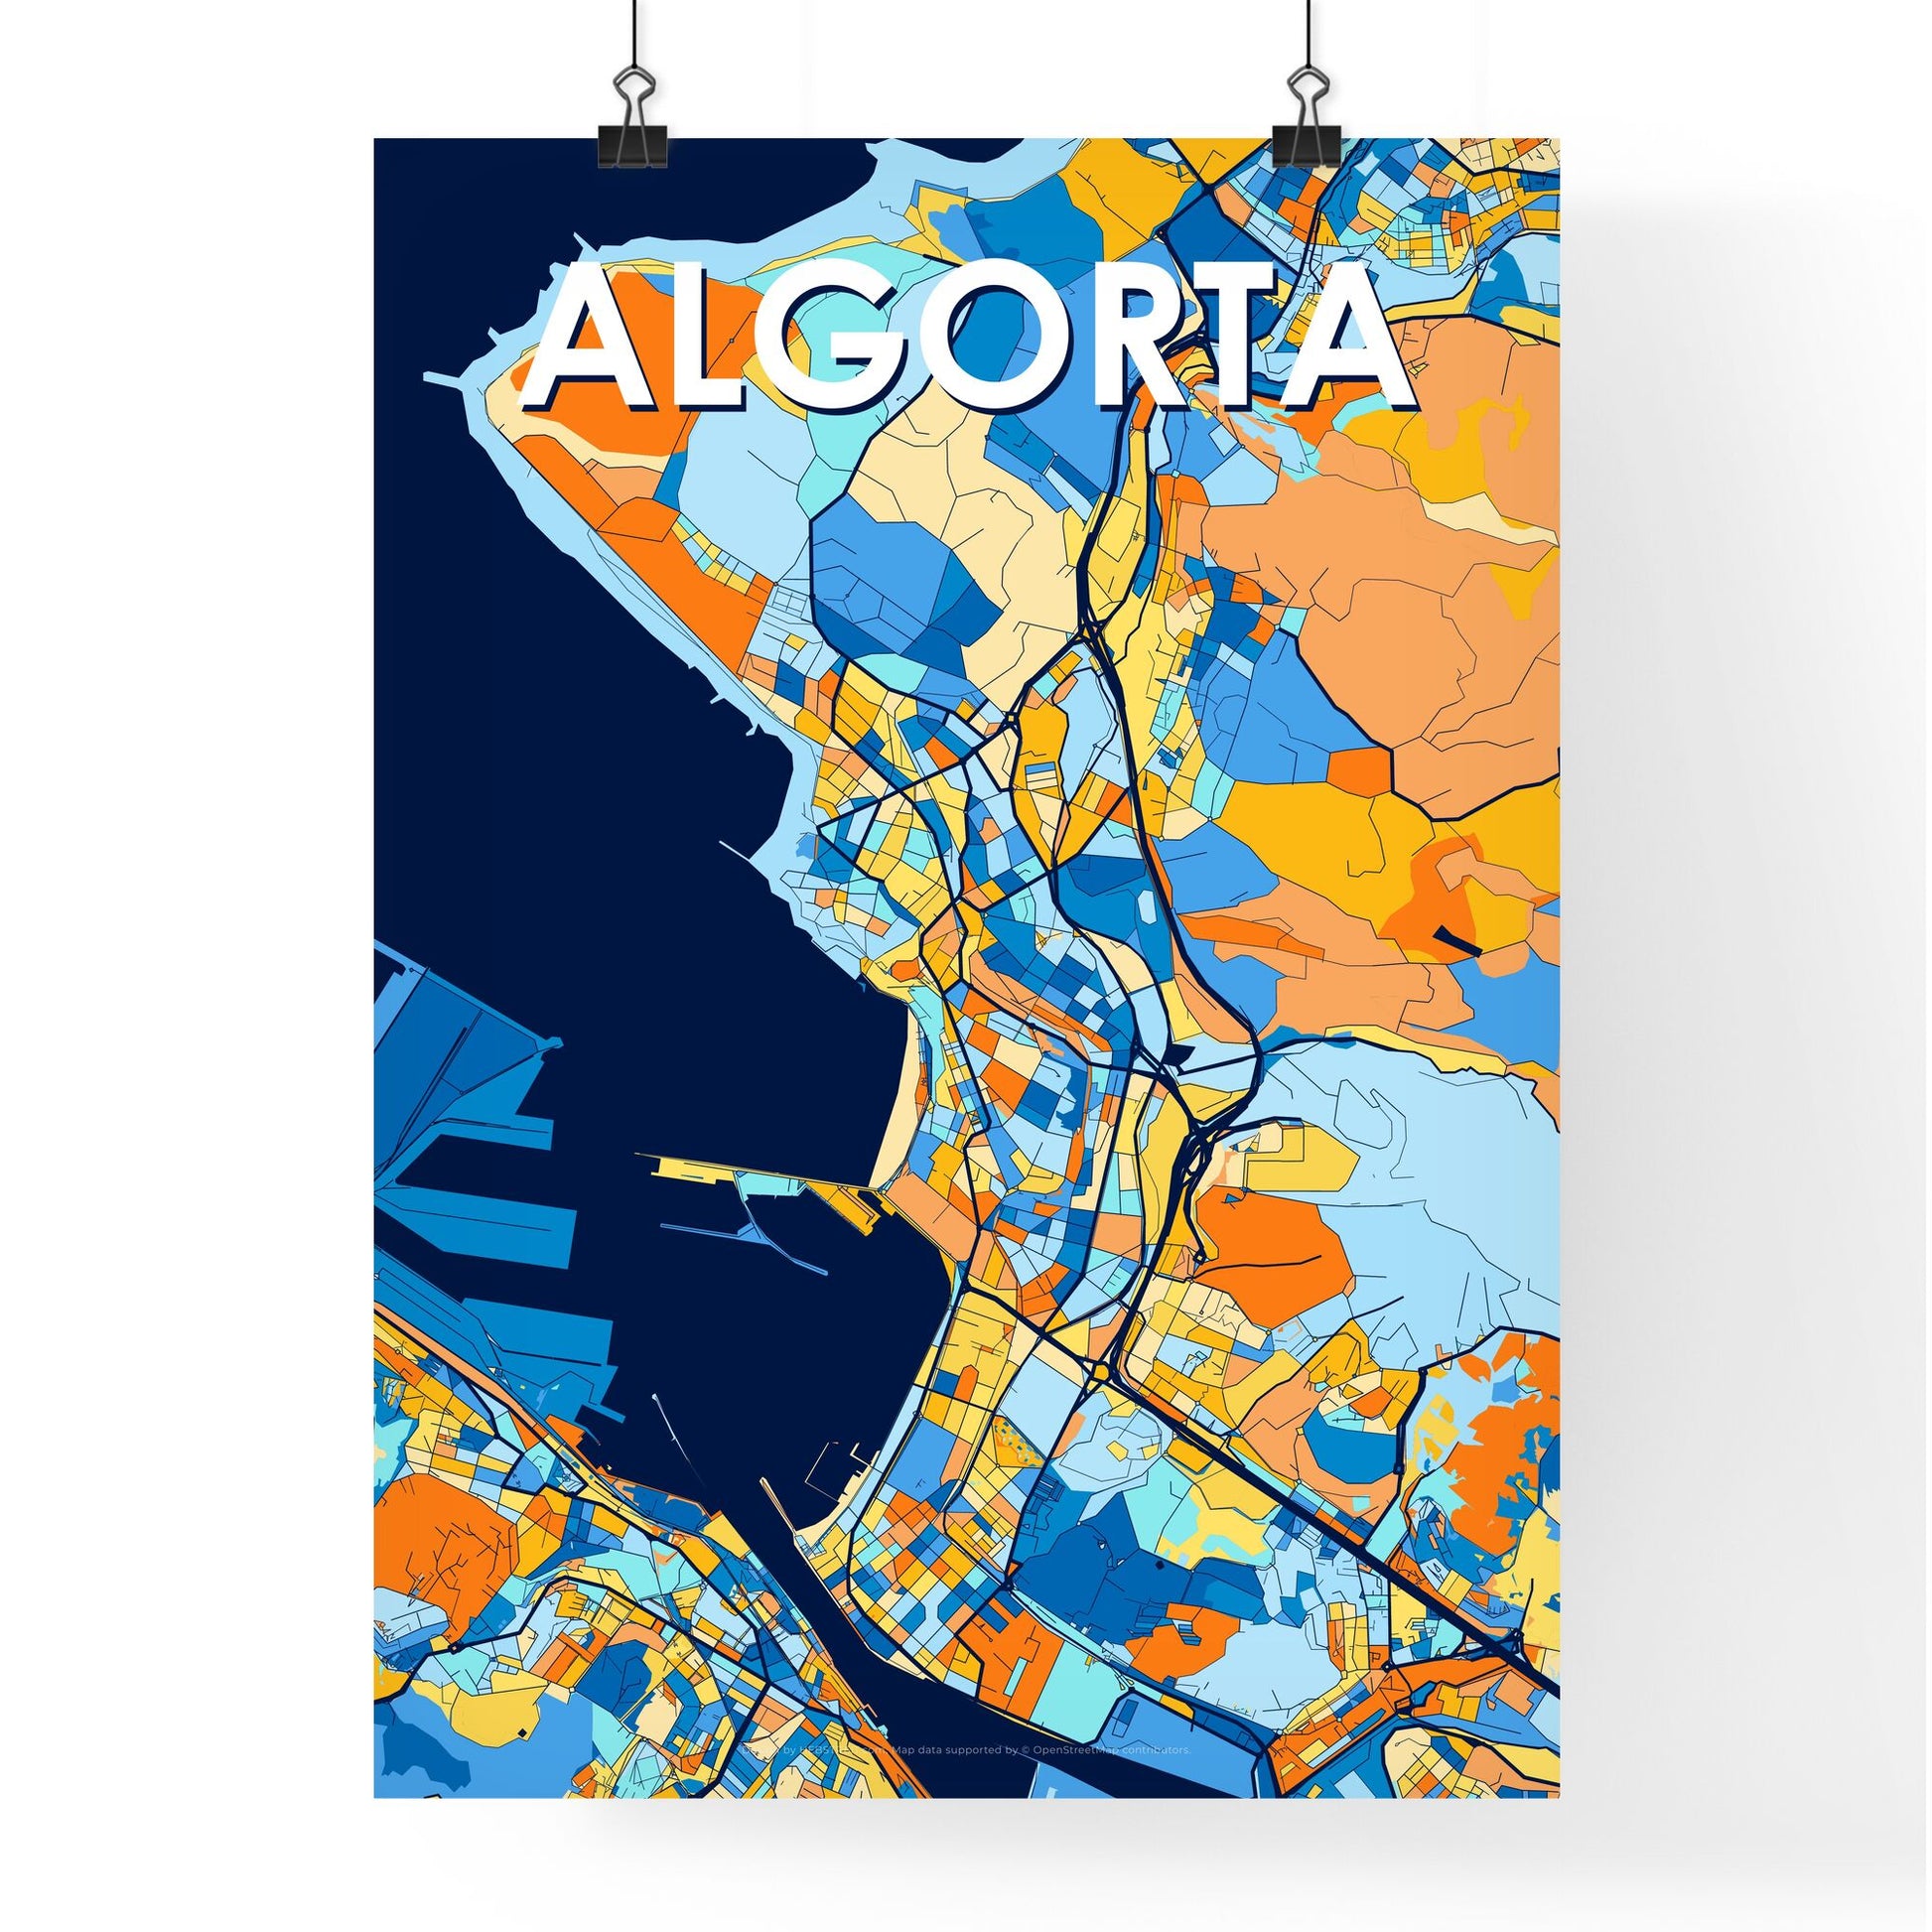 ALGORTA SPAIN Vibrant Colorful Art Map Poster Blue Orange